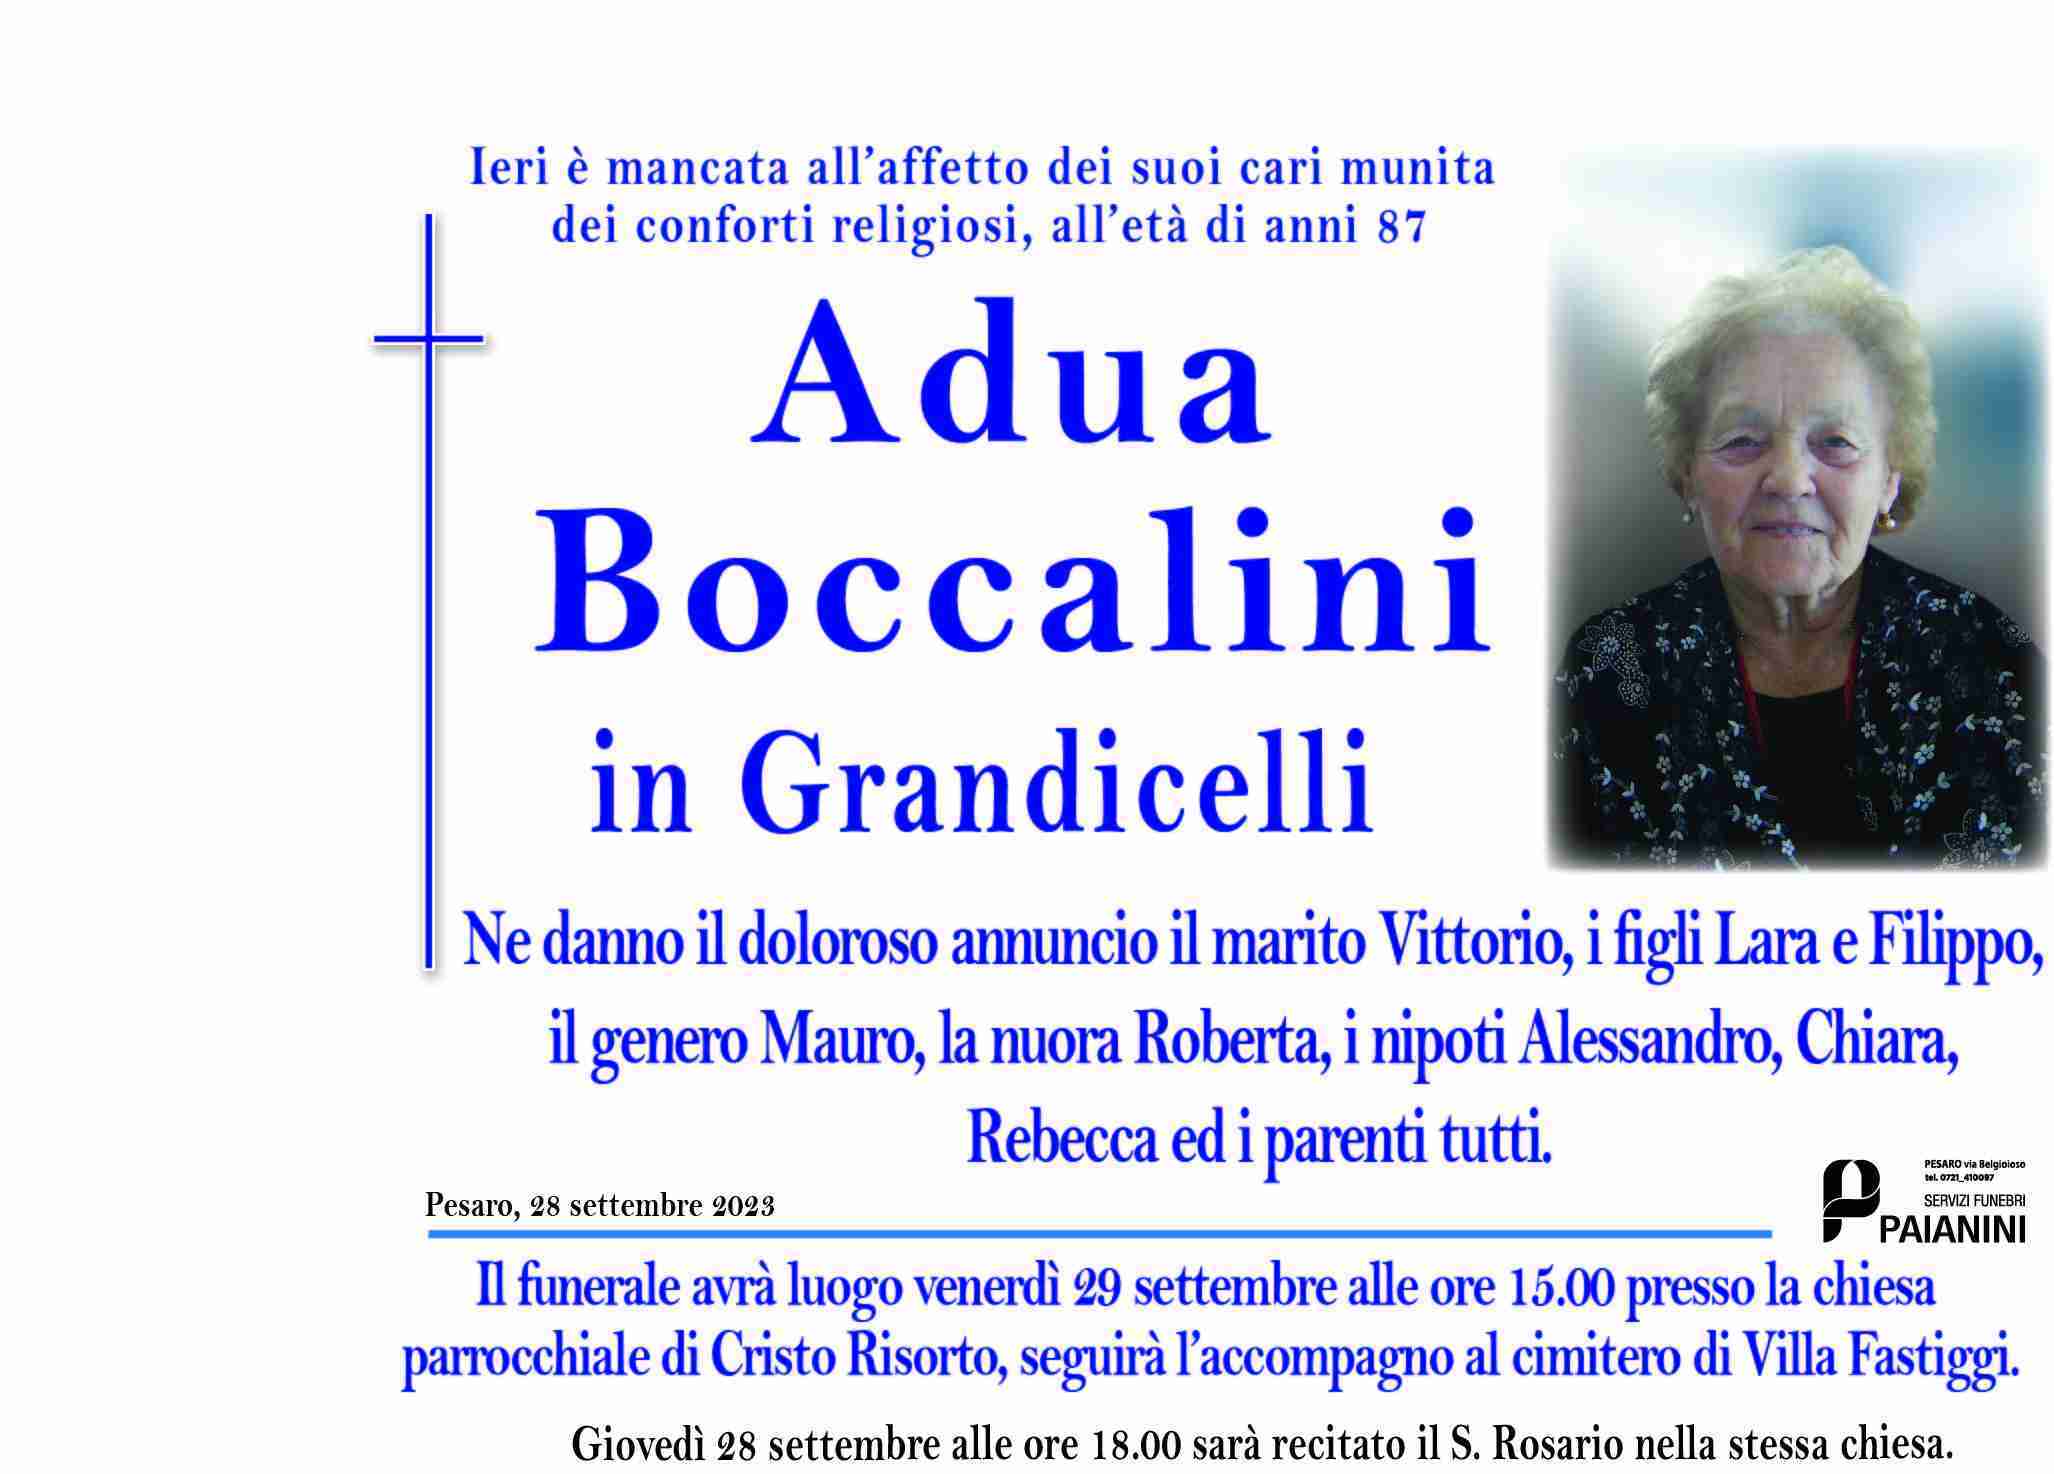 Adua Boccalini